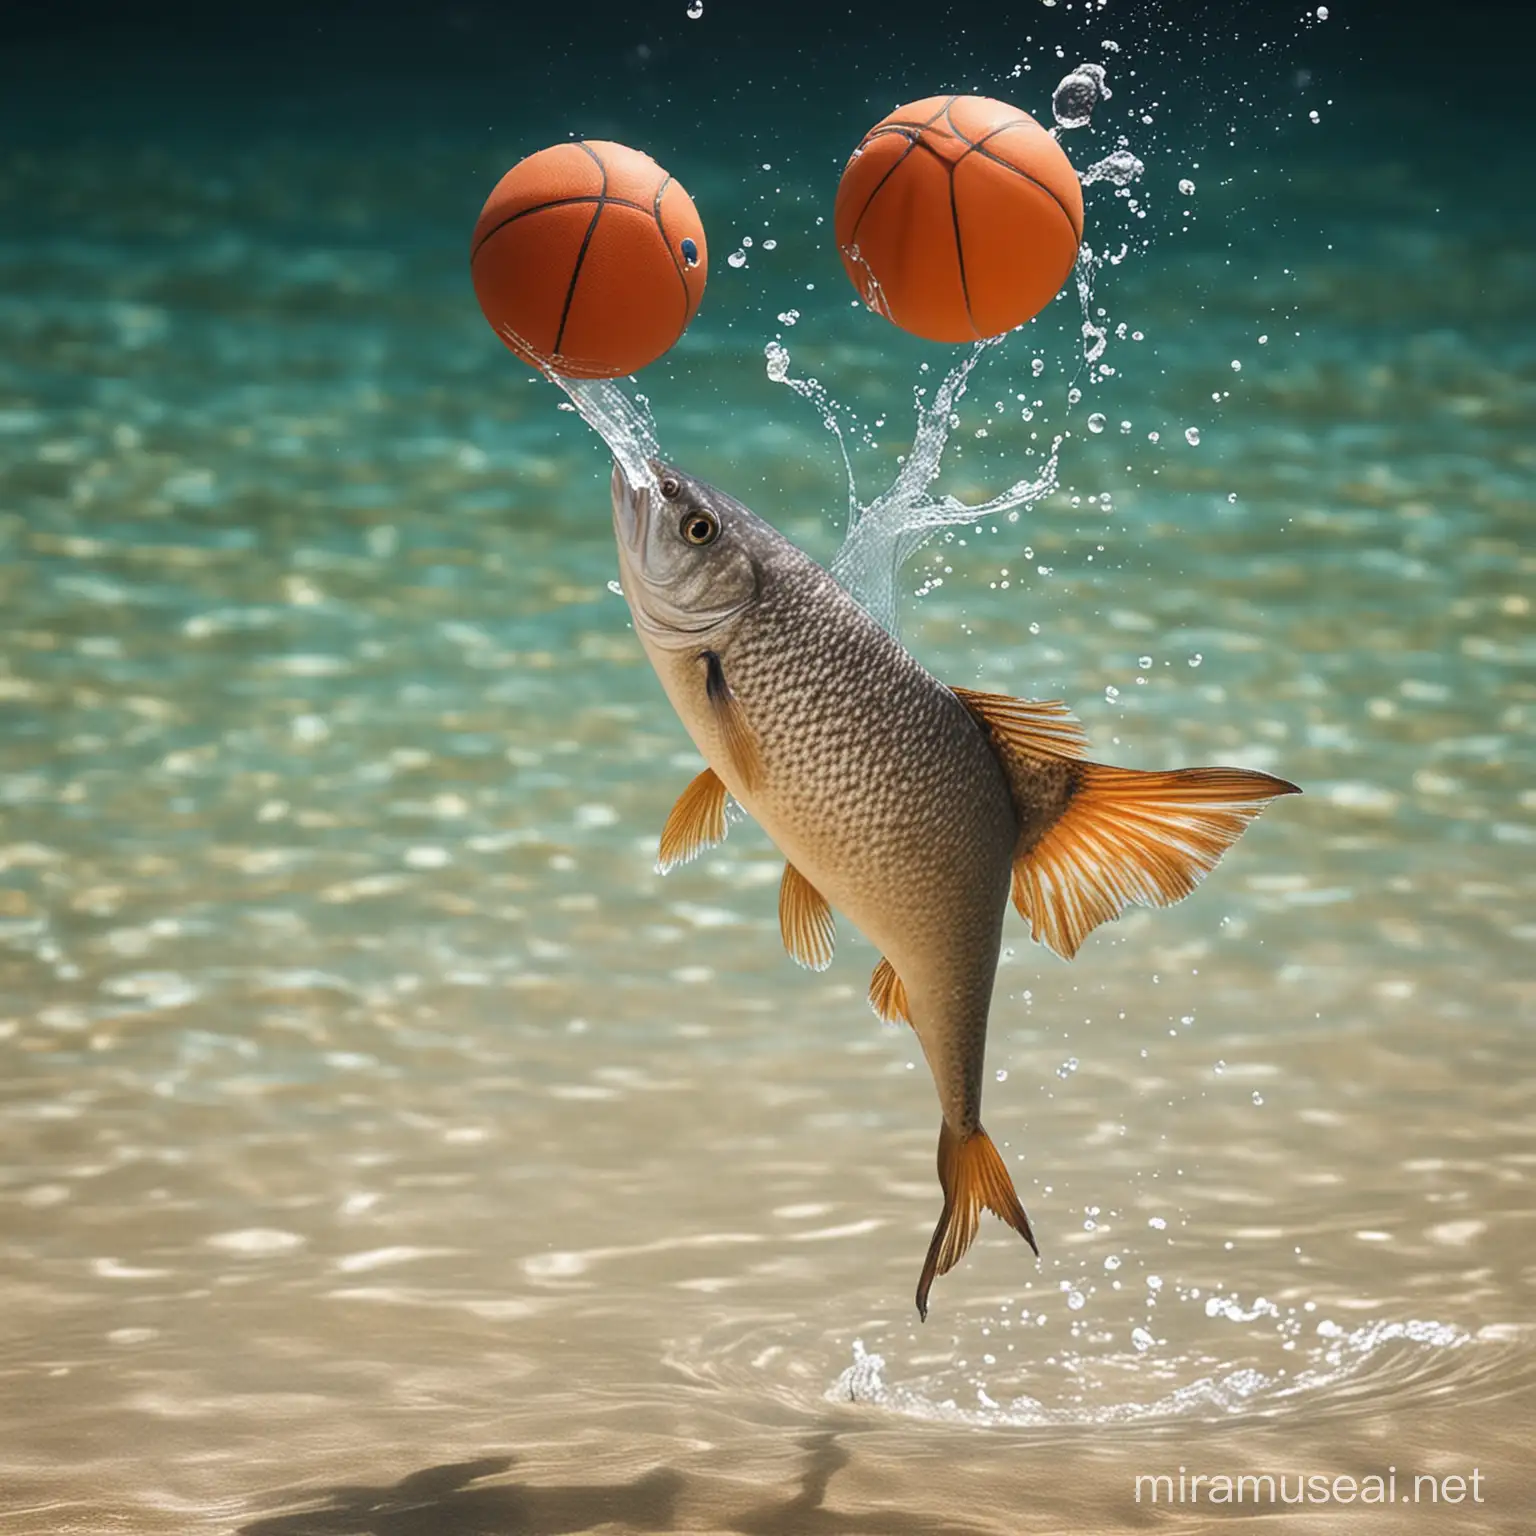 BasketballPlaying Fish Underwater Athletic Scene